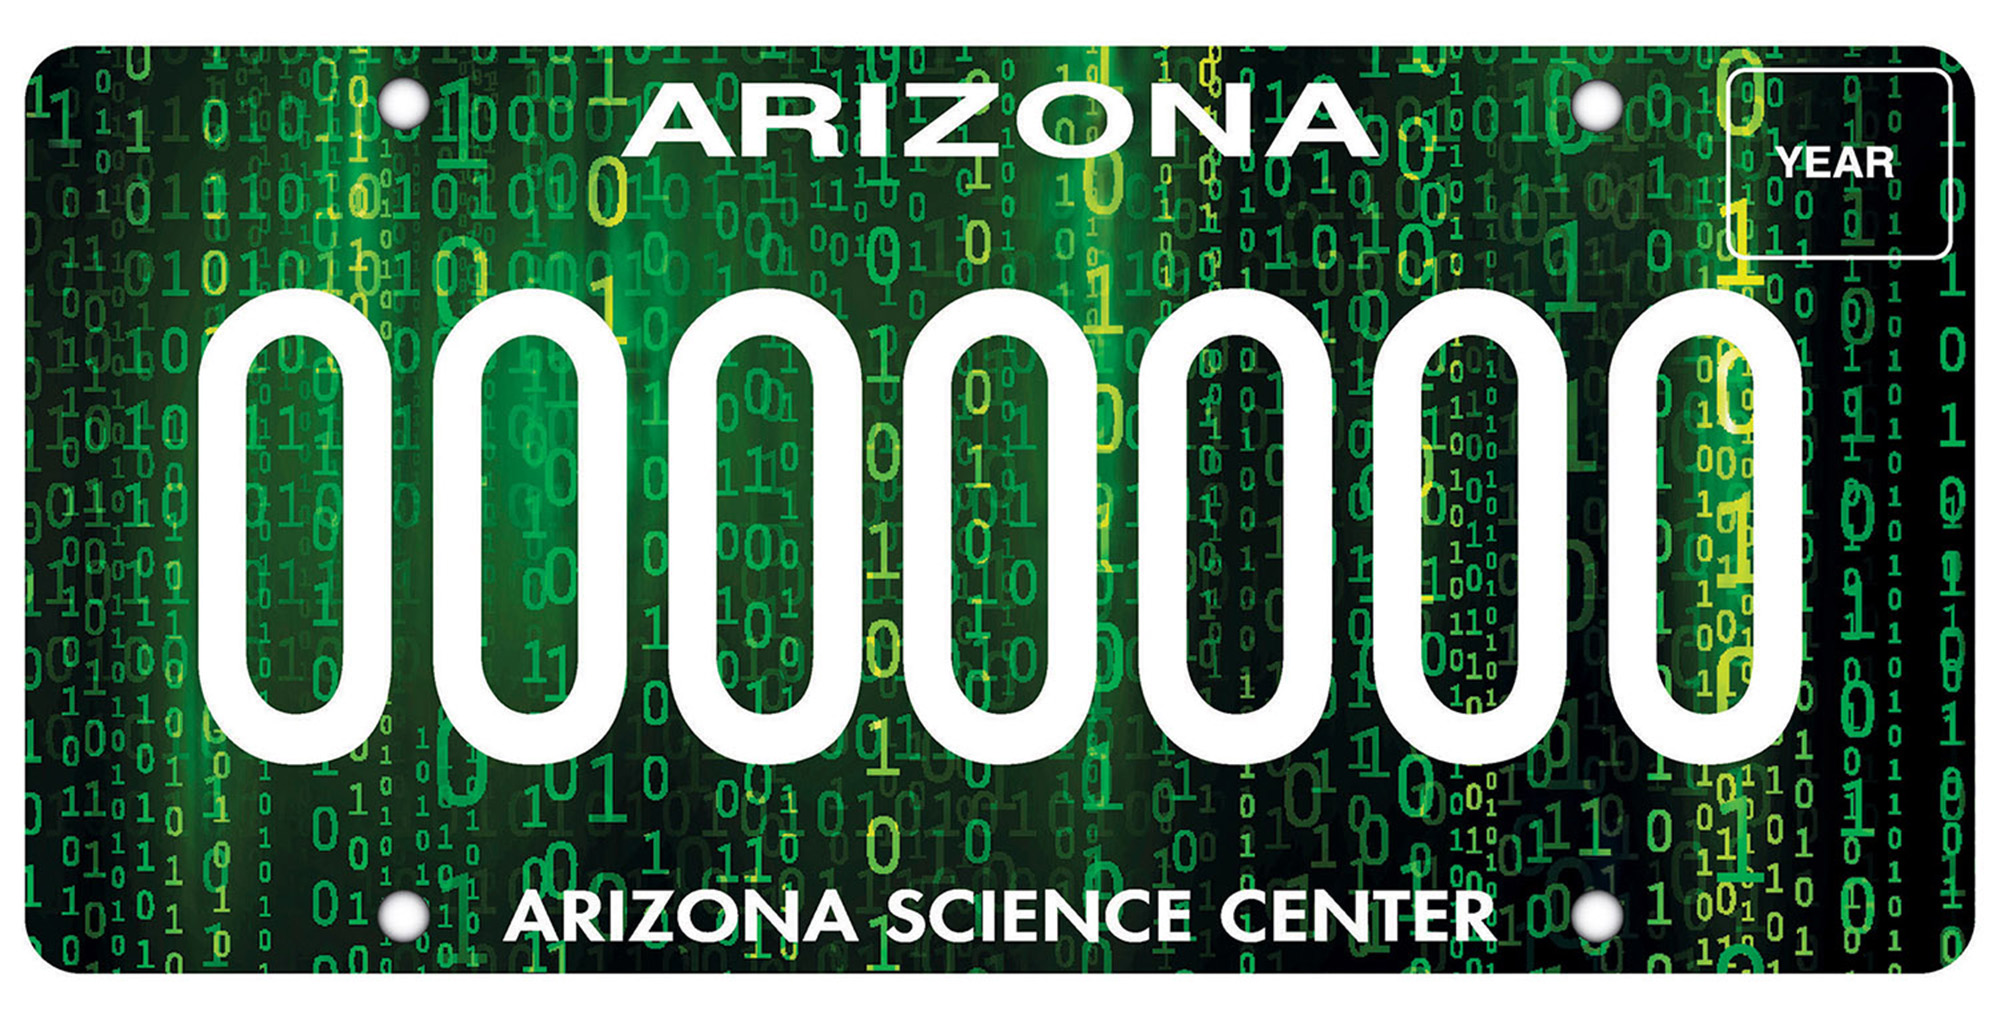 ADOT rolls out 3 new Arizona license plates